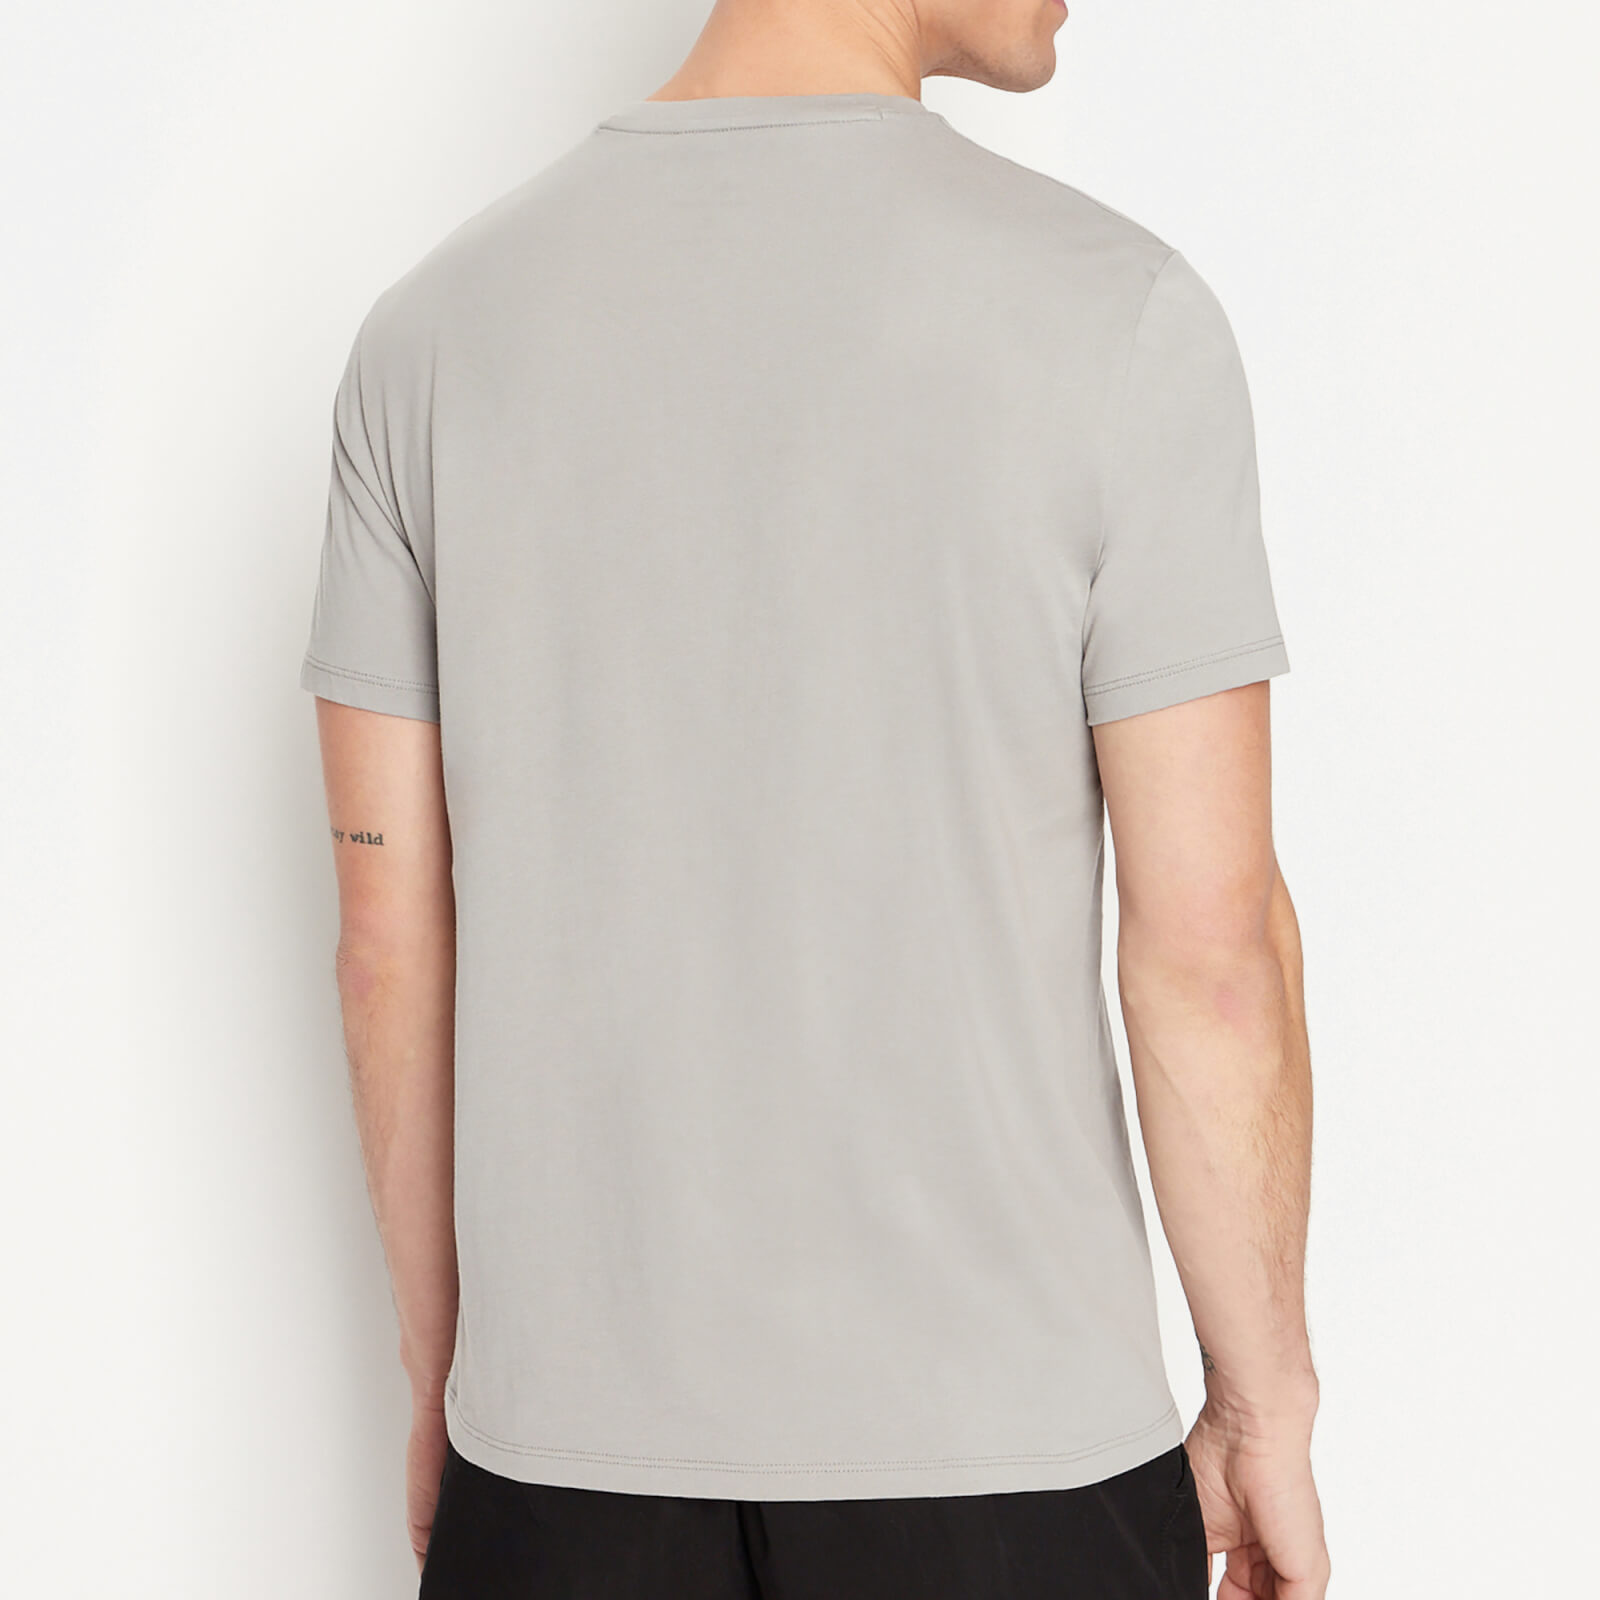 armani exchange printed cotton-jersey t-shirt - s